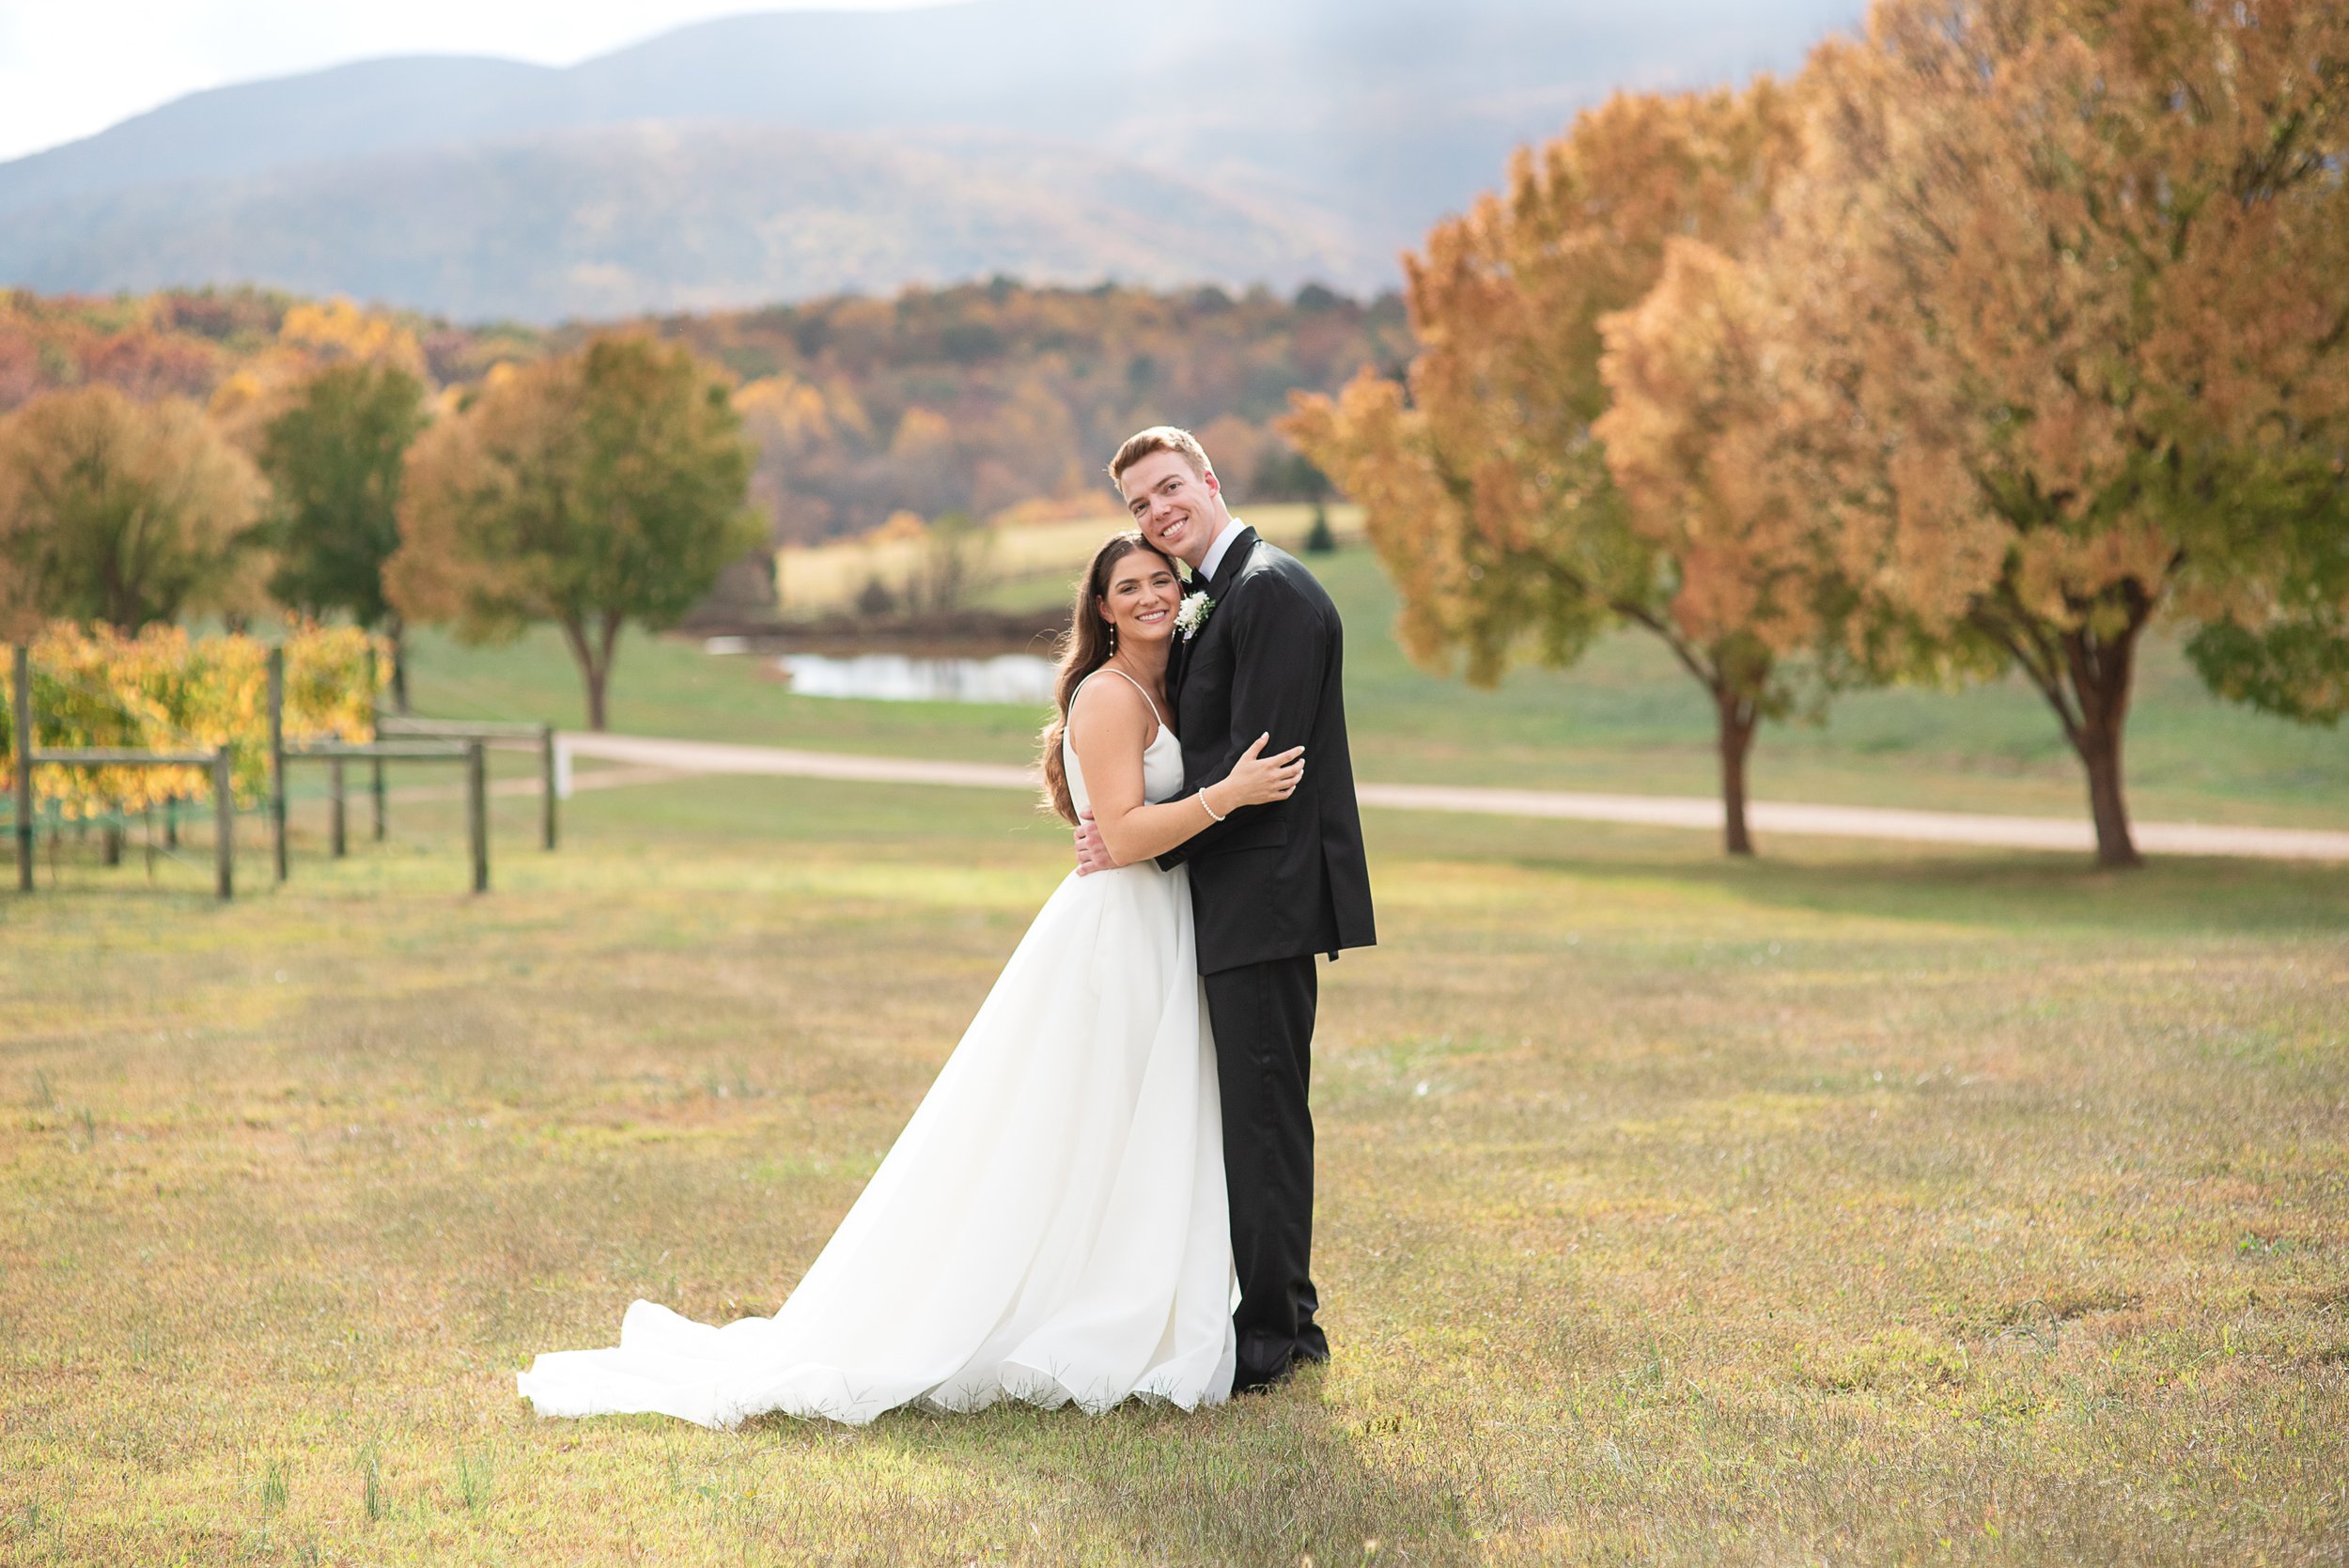 charlottesville-wedding-photographer-karin-nicole-photography-1-26.jpg